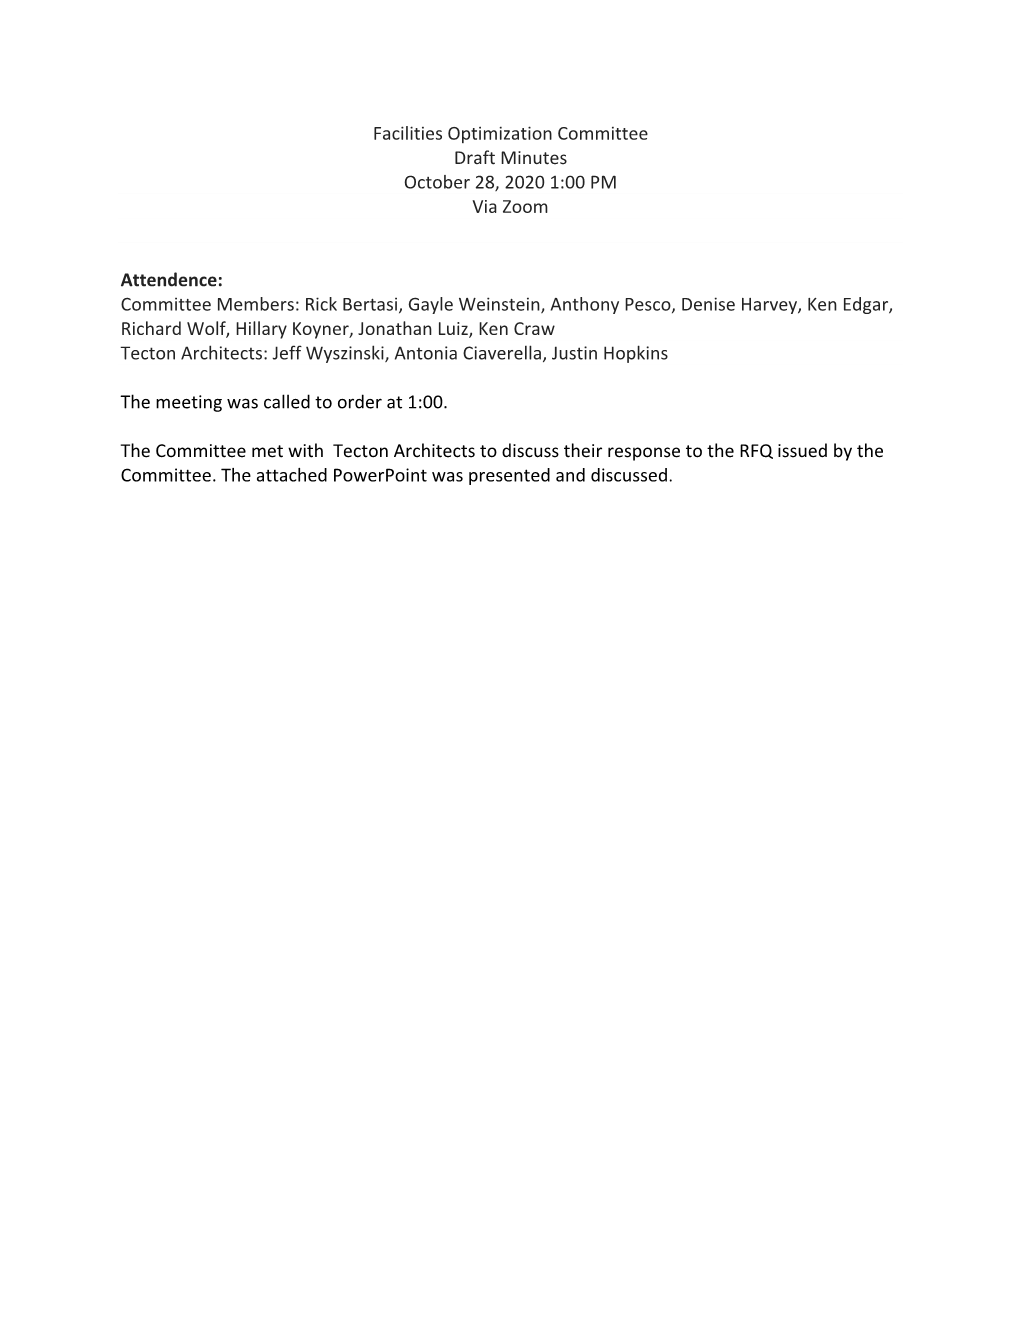 Facilities Optimization Committee Draft Minutes October 28, 2020 1:00 PM Via Zoom